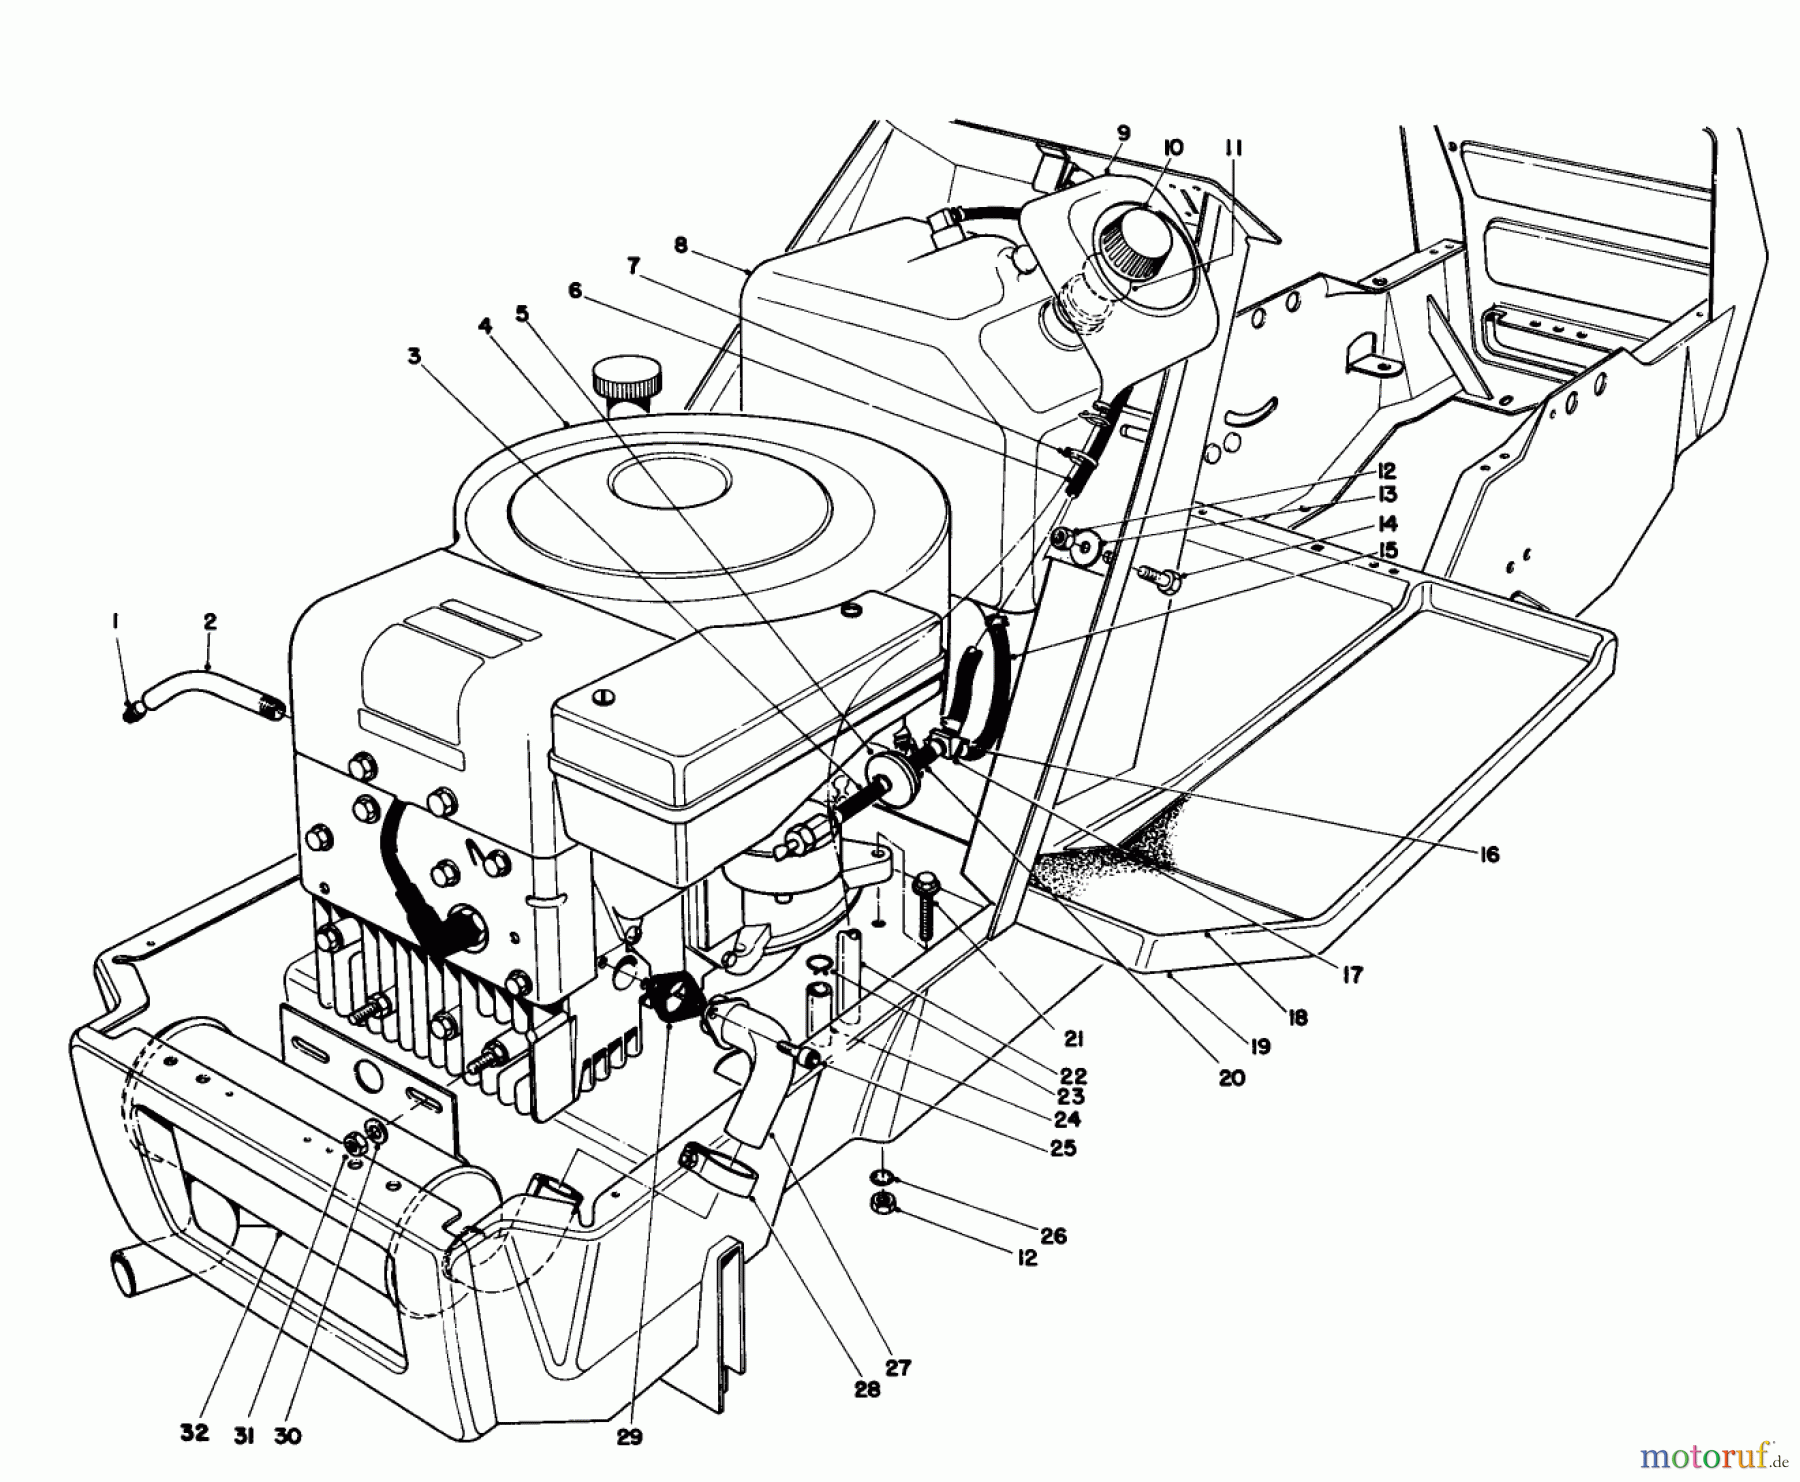  Toro Neu Mowers, Lawn & Garden Tractor Seite 1 57300 (8-32) - Toro 8-32 Front Engine Rider, 1984 (4000001-4999999) ENGINE ASSEMBLY MODEL 57360